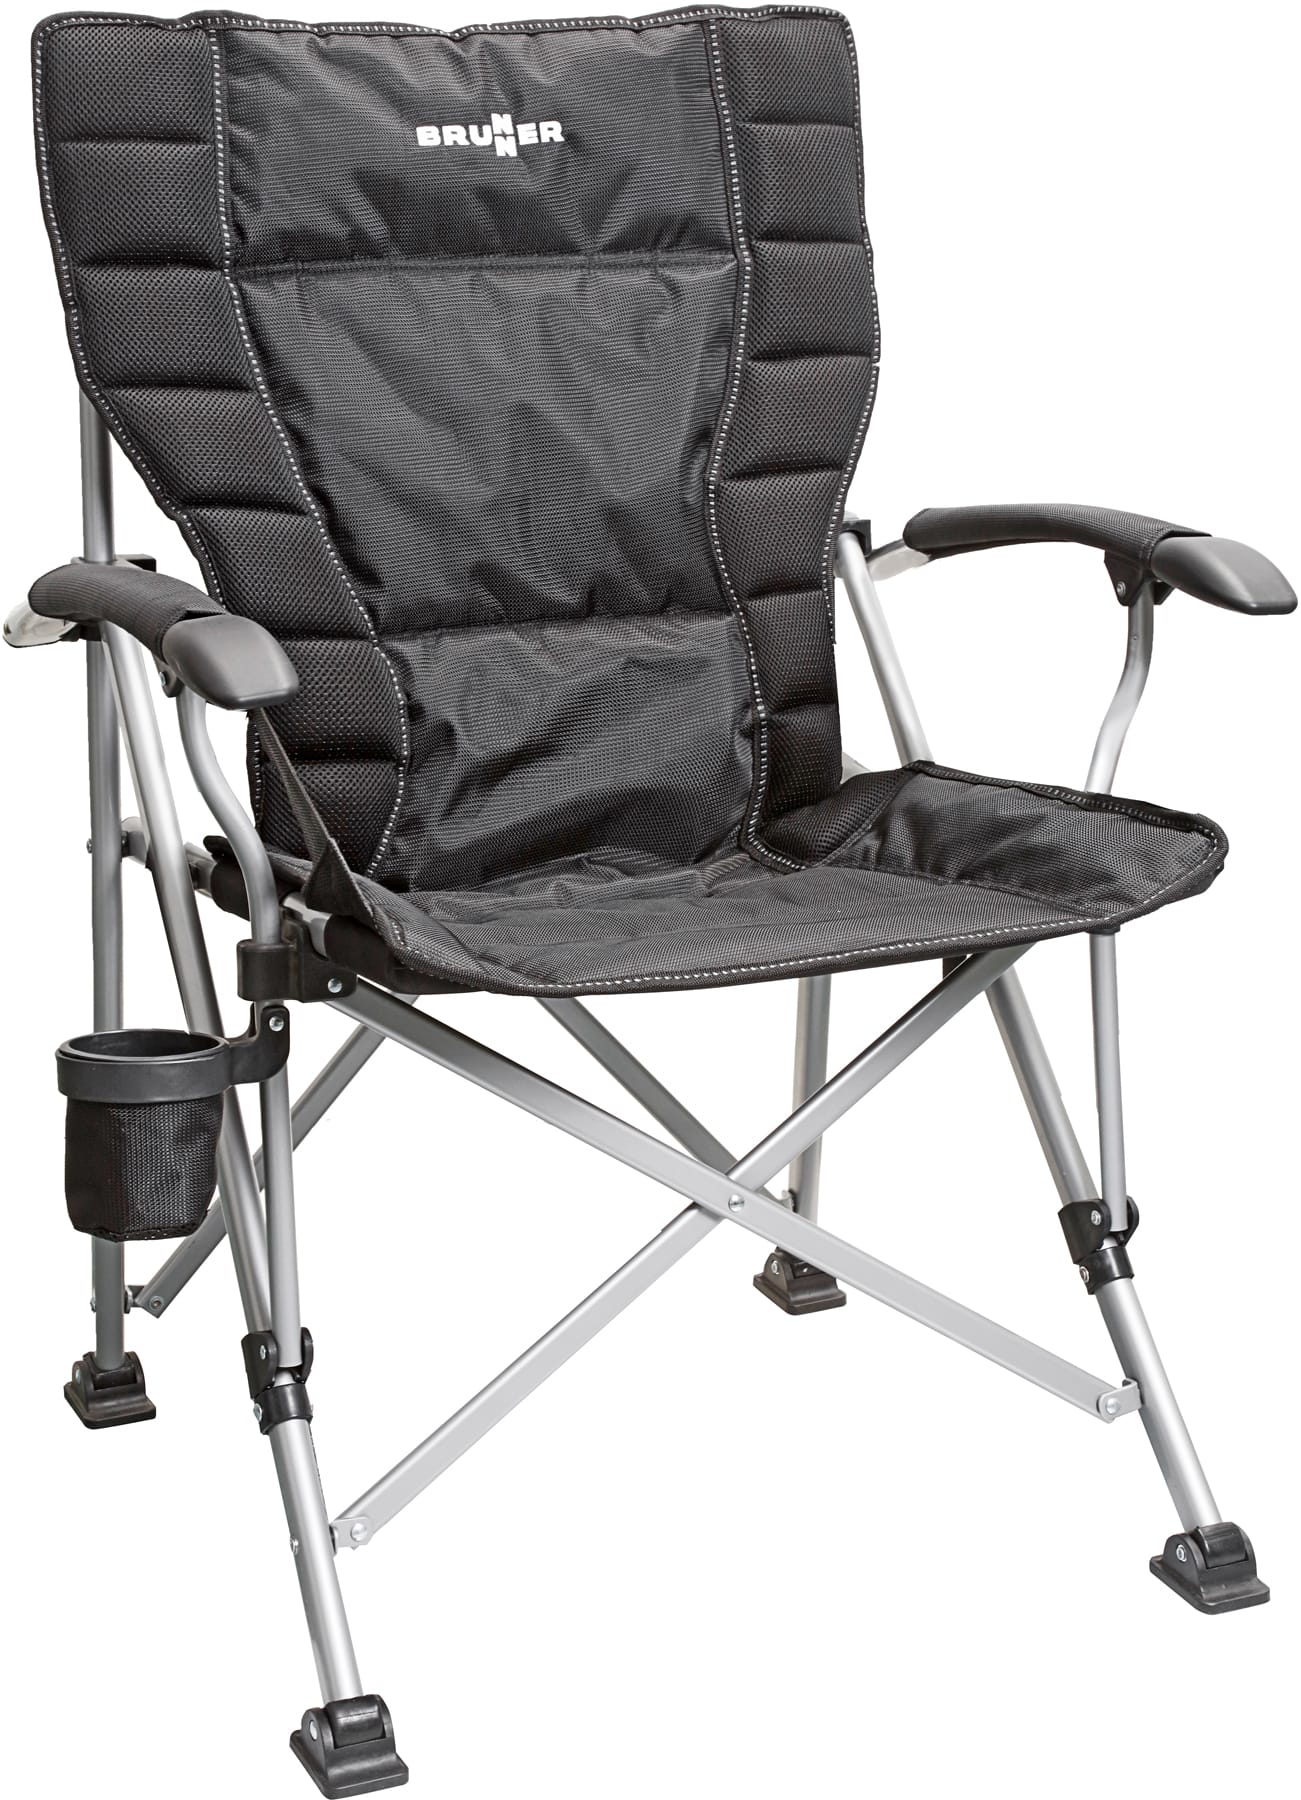 Brunner Raptor NG 2.0 Folding Camping Chair